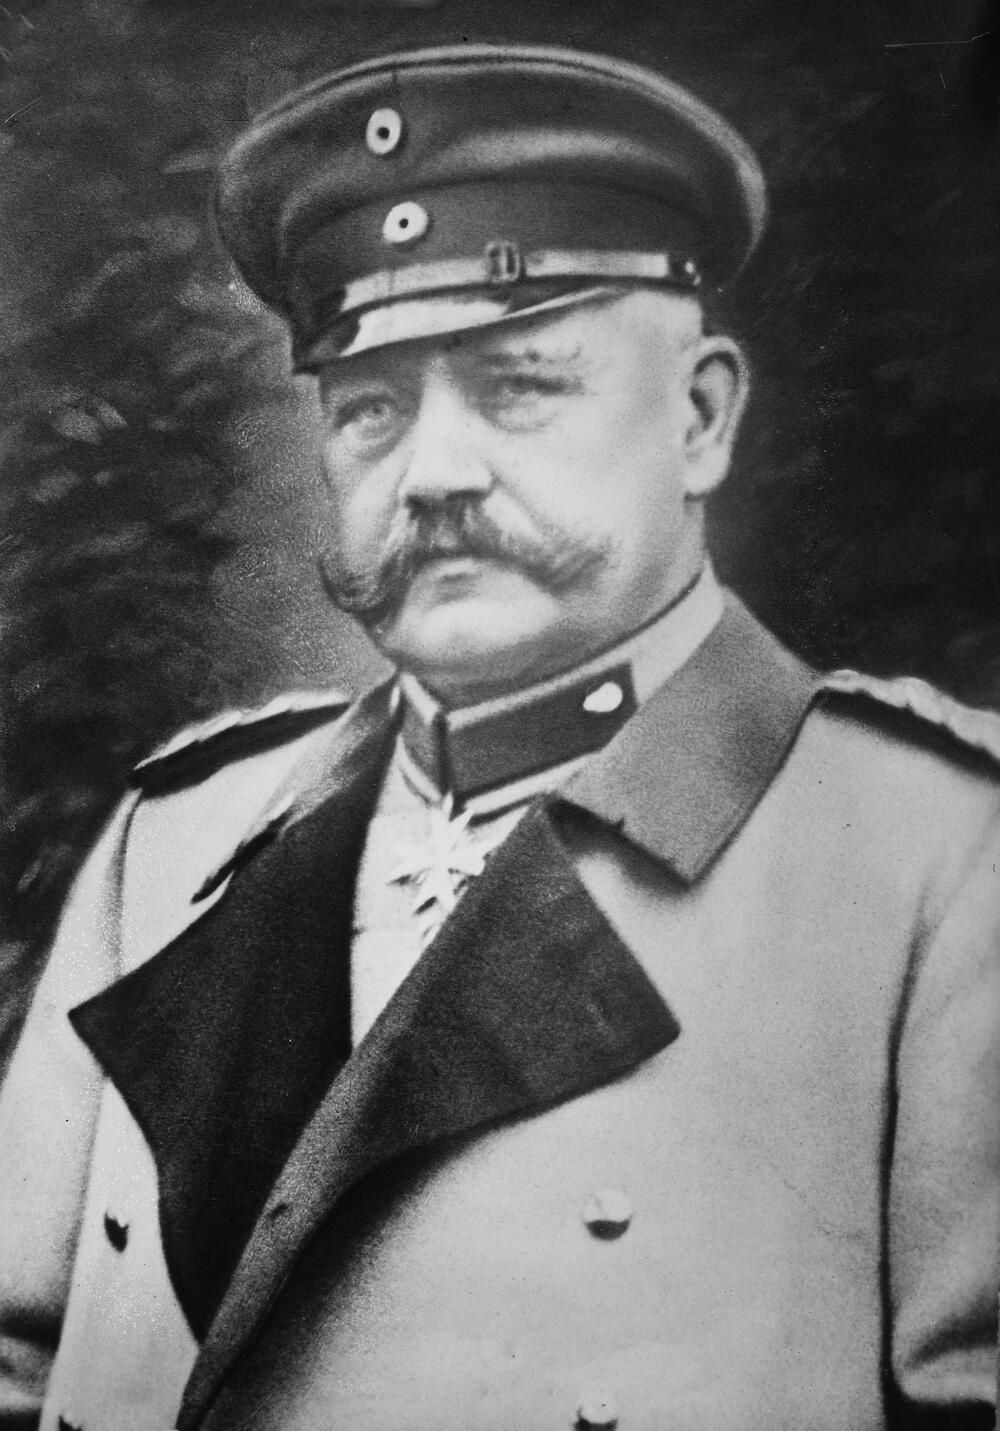 Paul fon Hindenburg